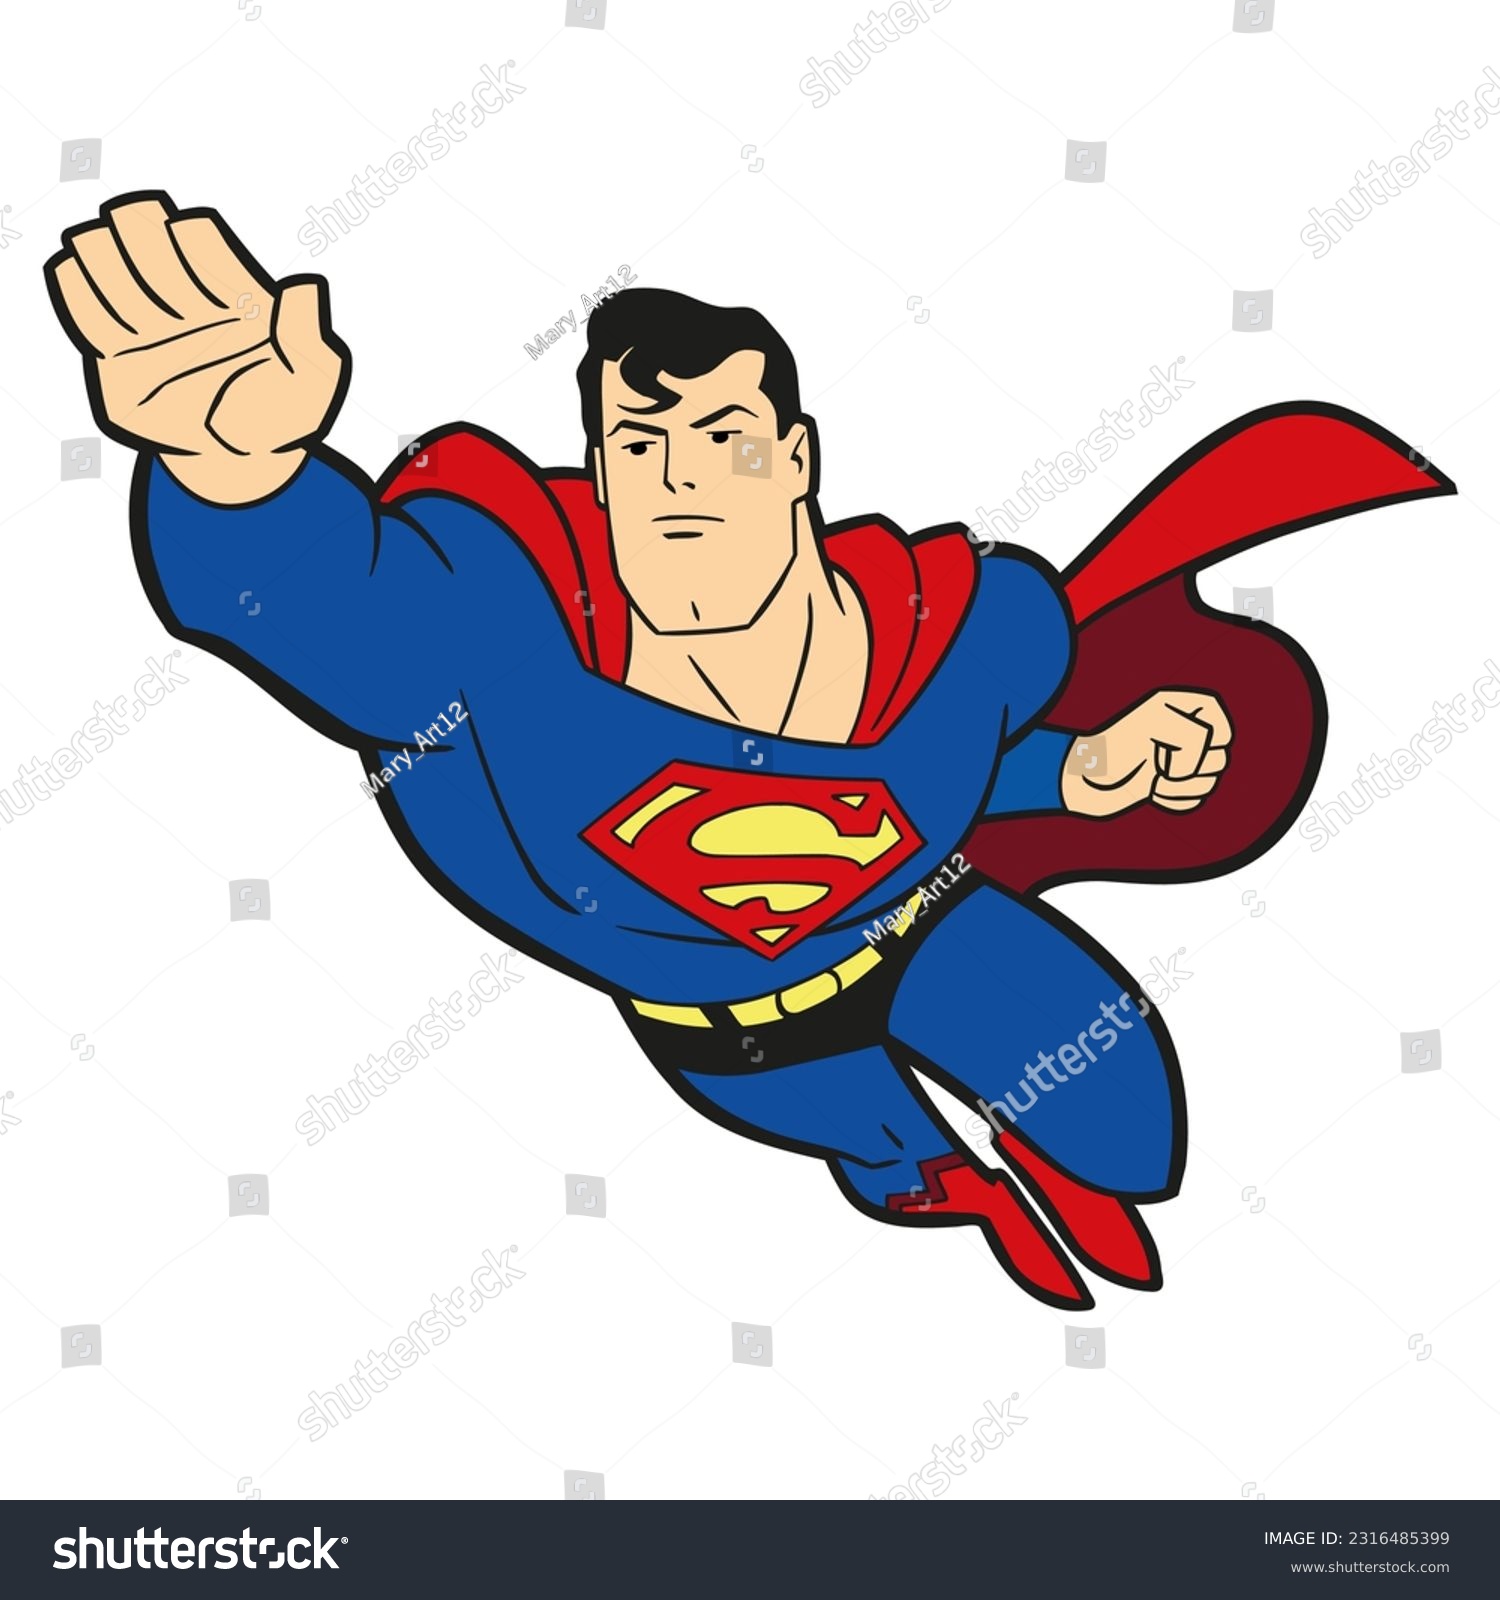 Superman cartoon images stock photos d objects vectors